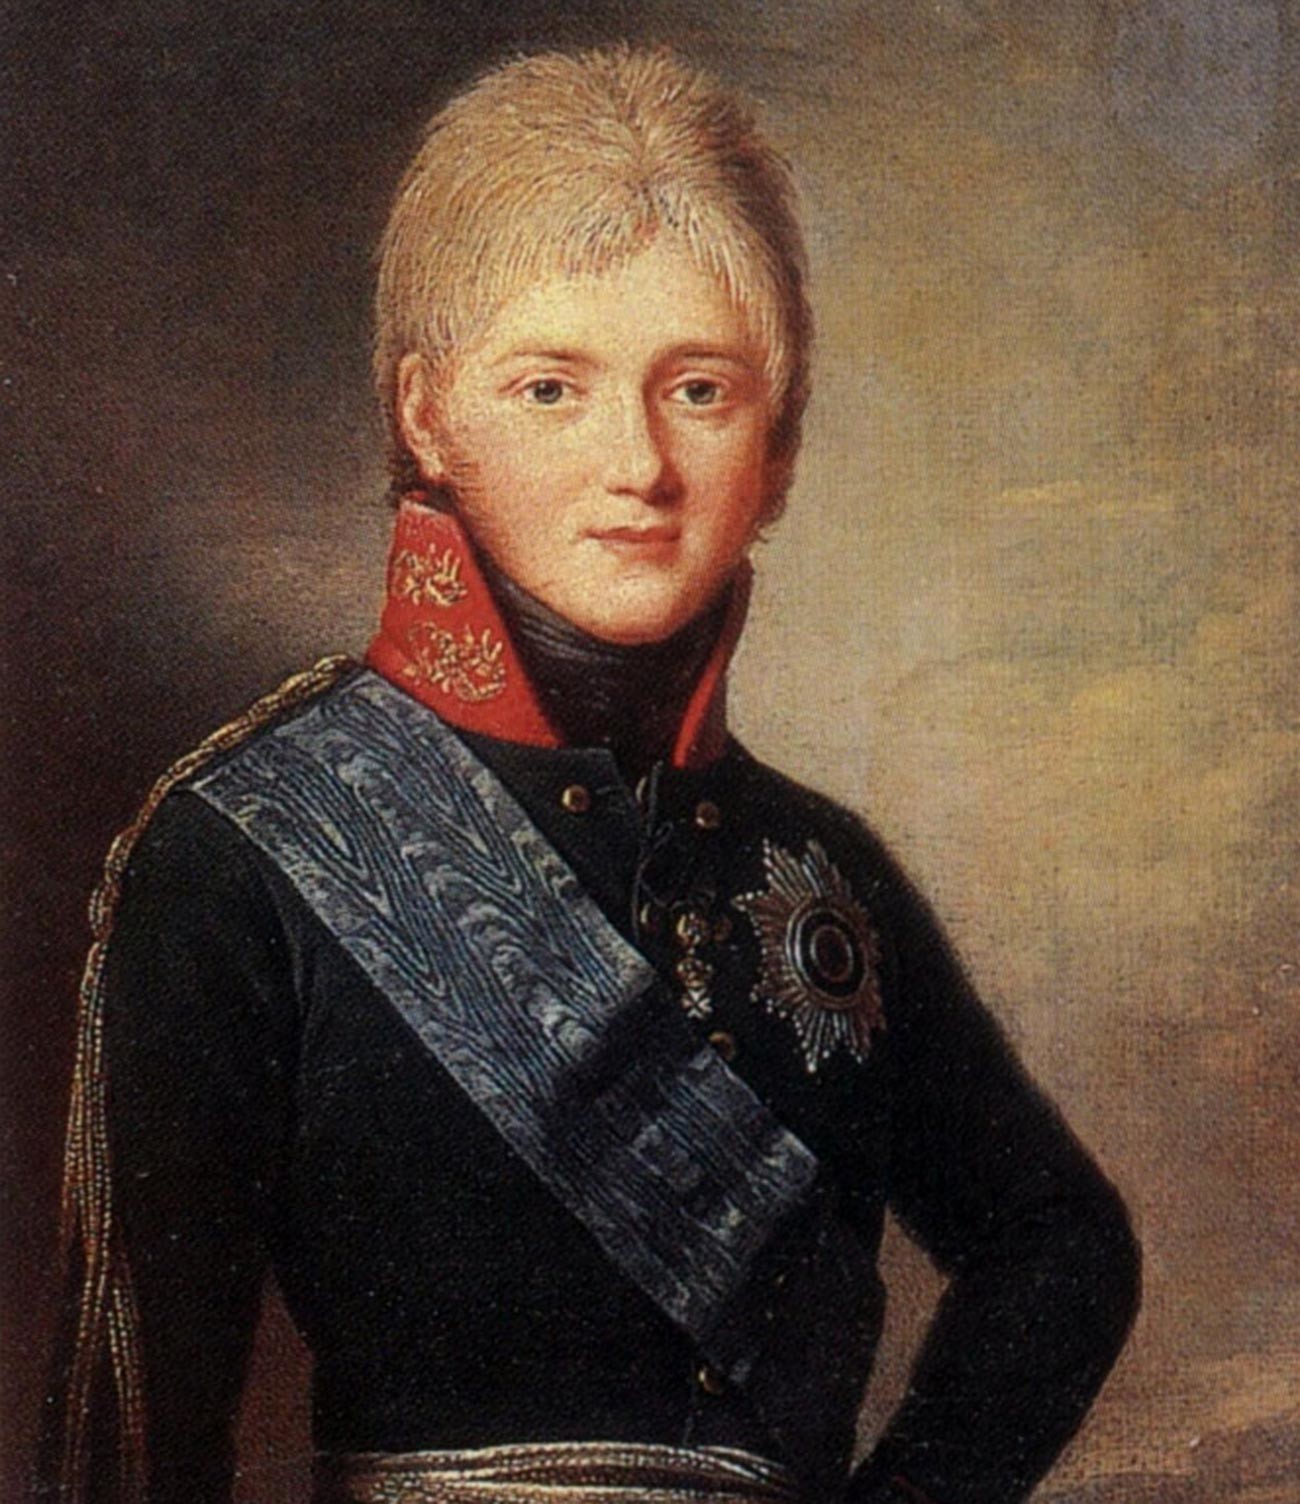 Großherzog Alexander, der zukünftige Kaiser Alexander I.